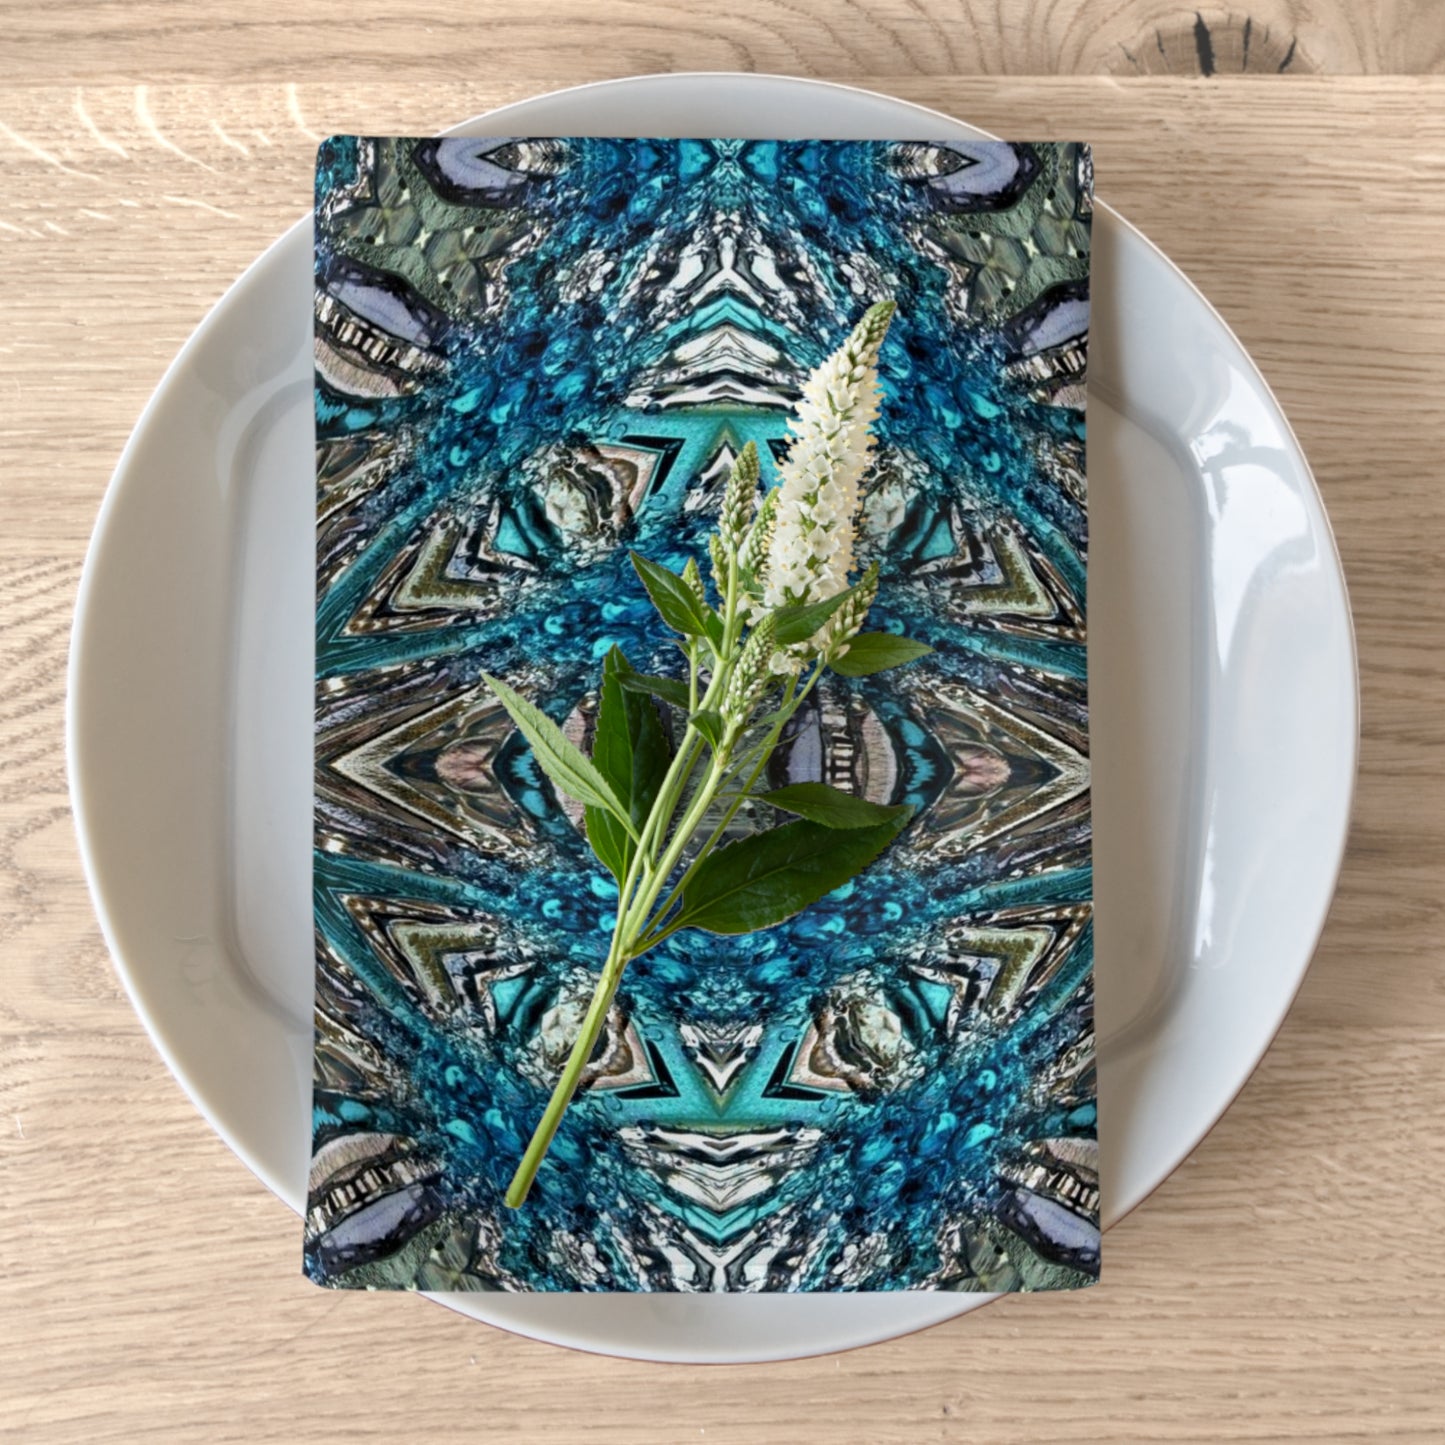 blue grey cloth napkins with snowflakes print